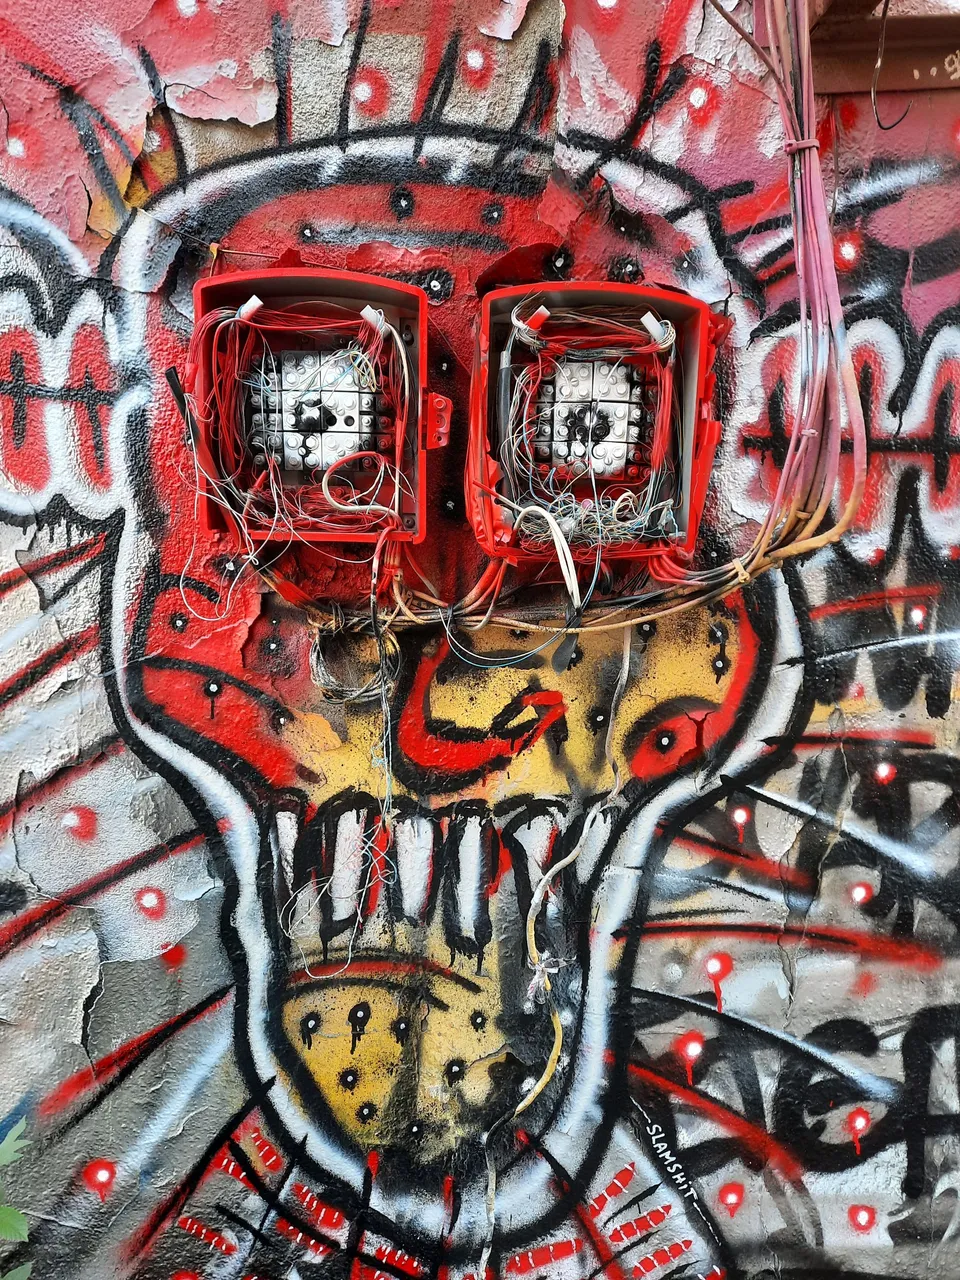 832 - (zykisart) Graffiti Alley.jpg